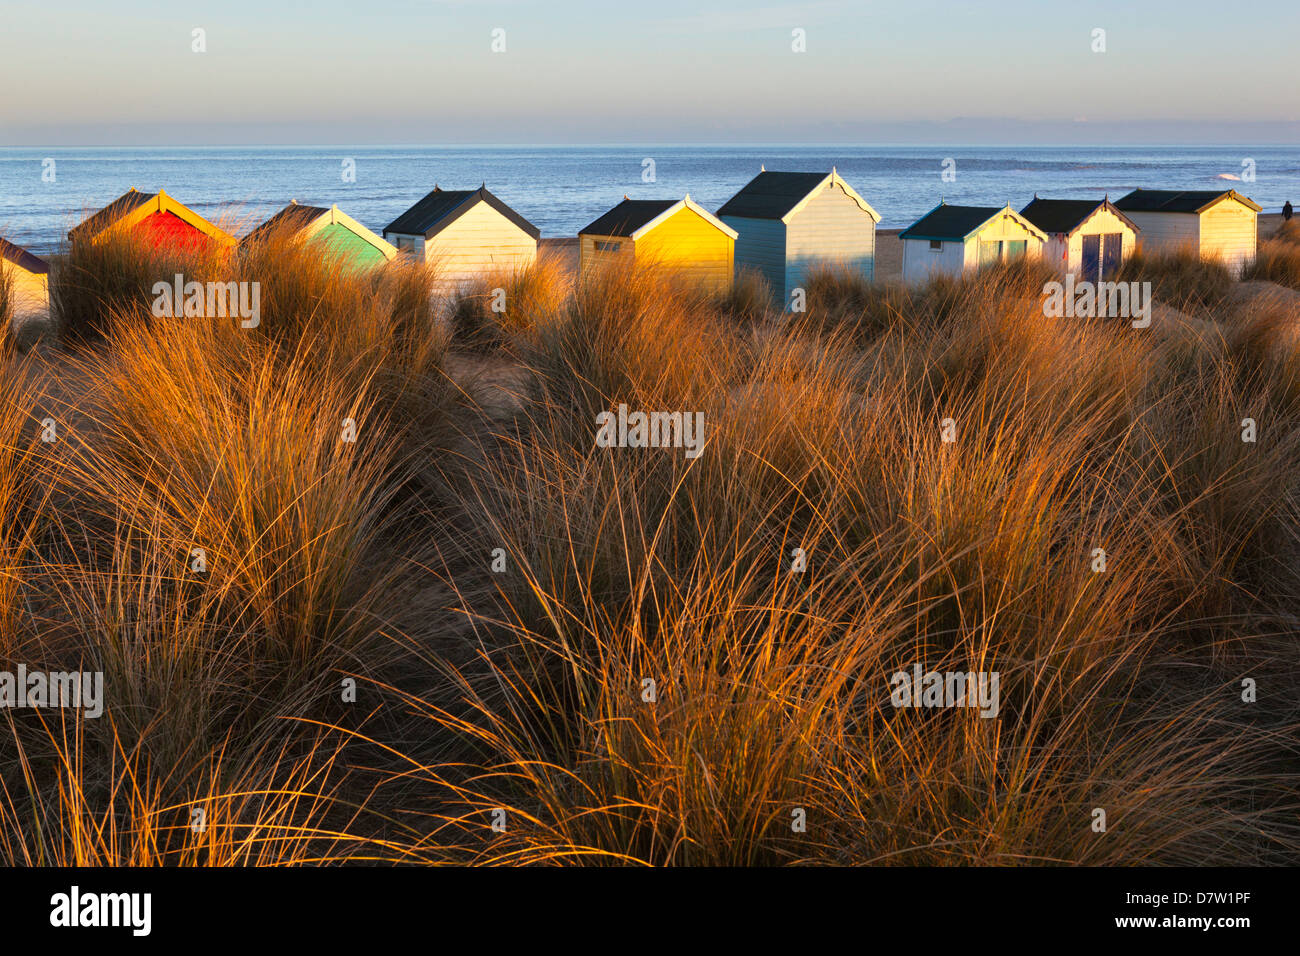 Beach huts amid sand dunes, Southwold, Suffolk, England, United Kingdom Stock Photo